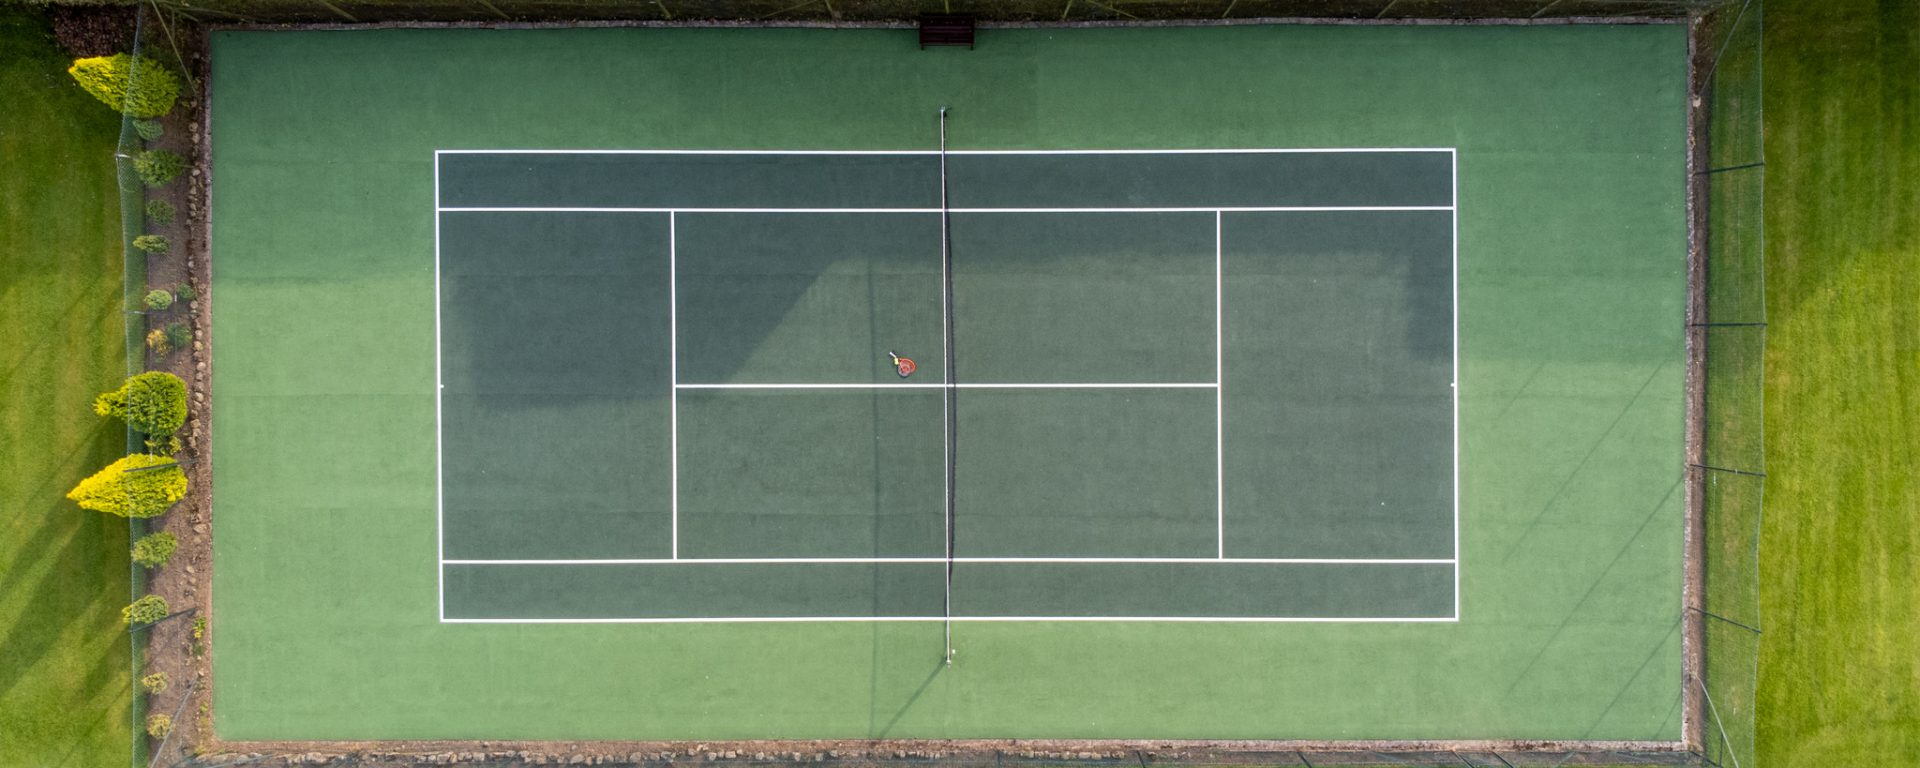 Aerial photo of Headlam Hall tennis court